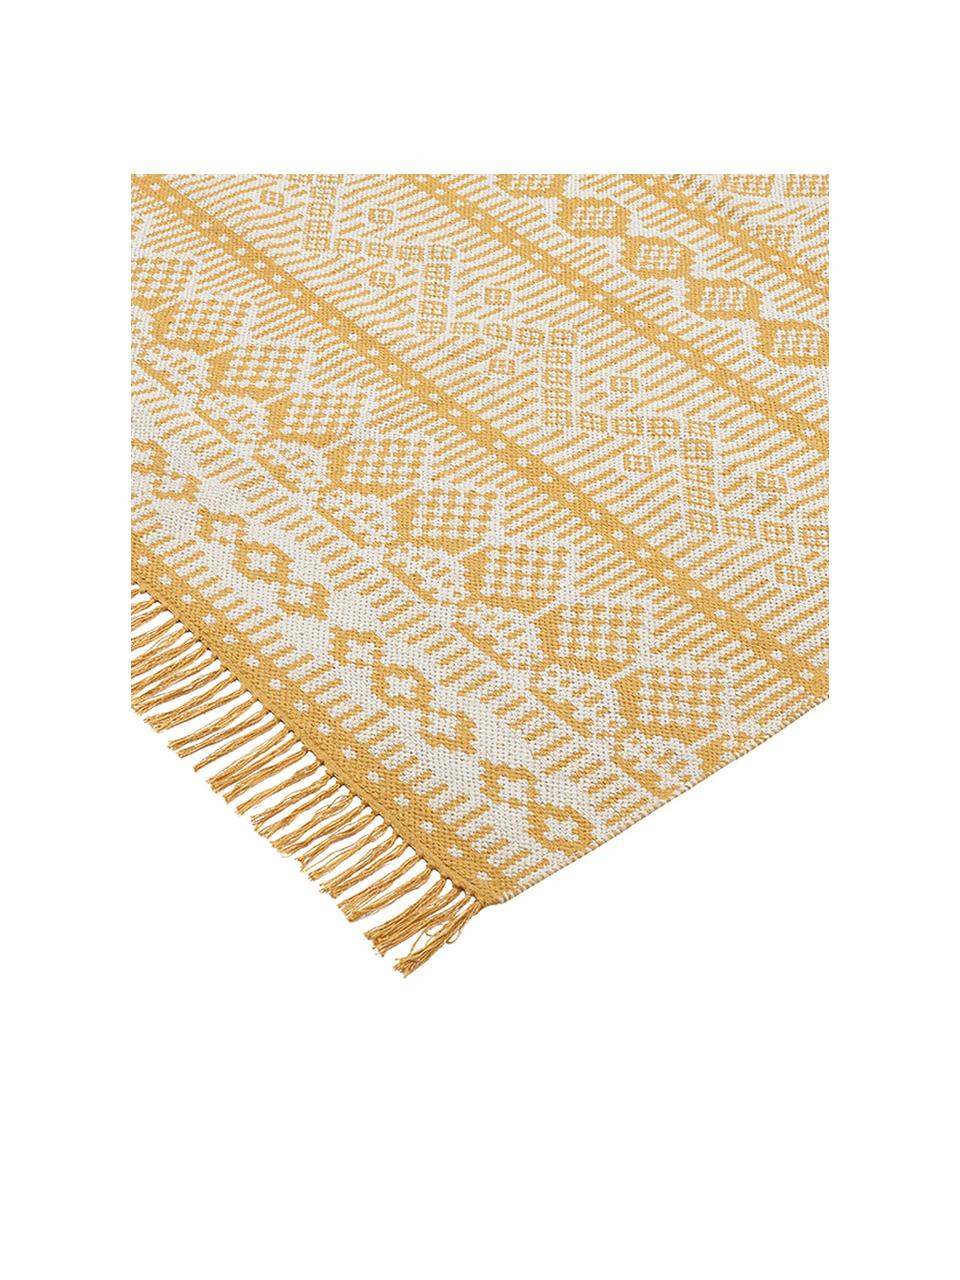 Ethno Teppich Panama aus recycelter Baumwolle, 100% Recycelte Baumwolle, Creme, Senfgelb, B 70 x L 140 cm (Grösse XS)